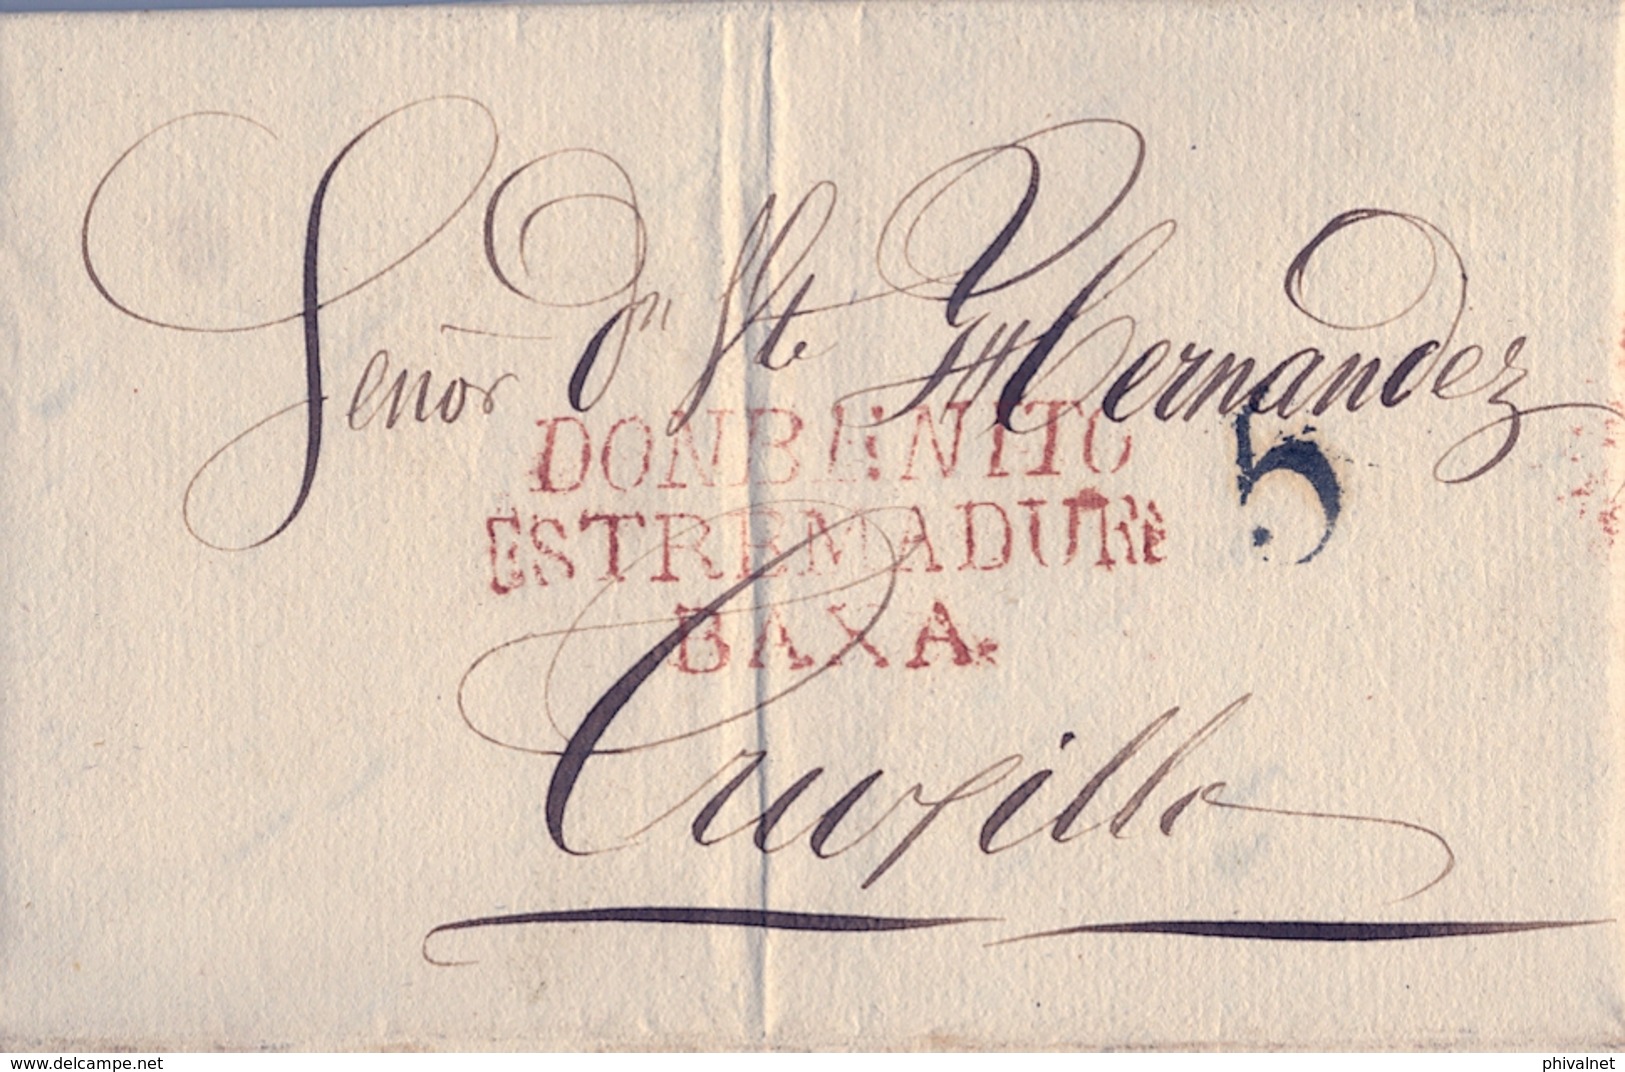 PREFILATELIA , 1842  , CARTA COMPLETA  , BADAJOZ , DON BENITO - TRUJILLO  , T. 3 - ...-1850 Préphilatélie